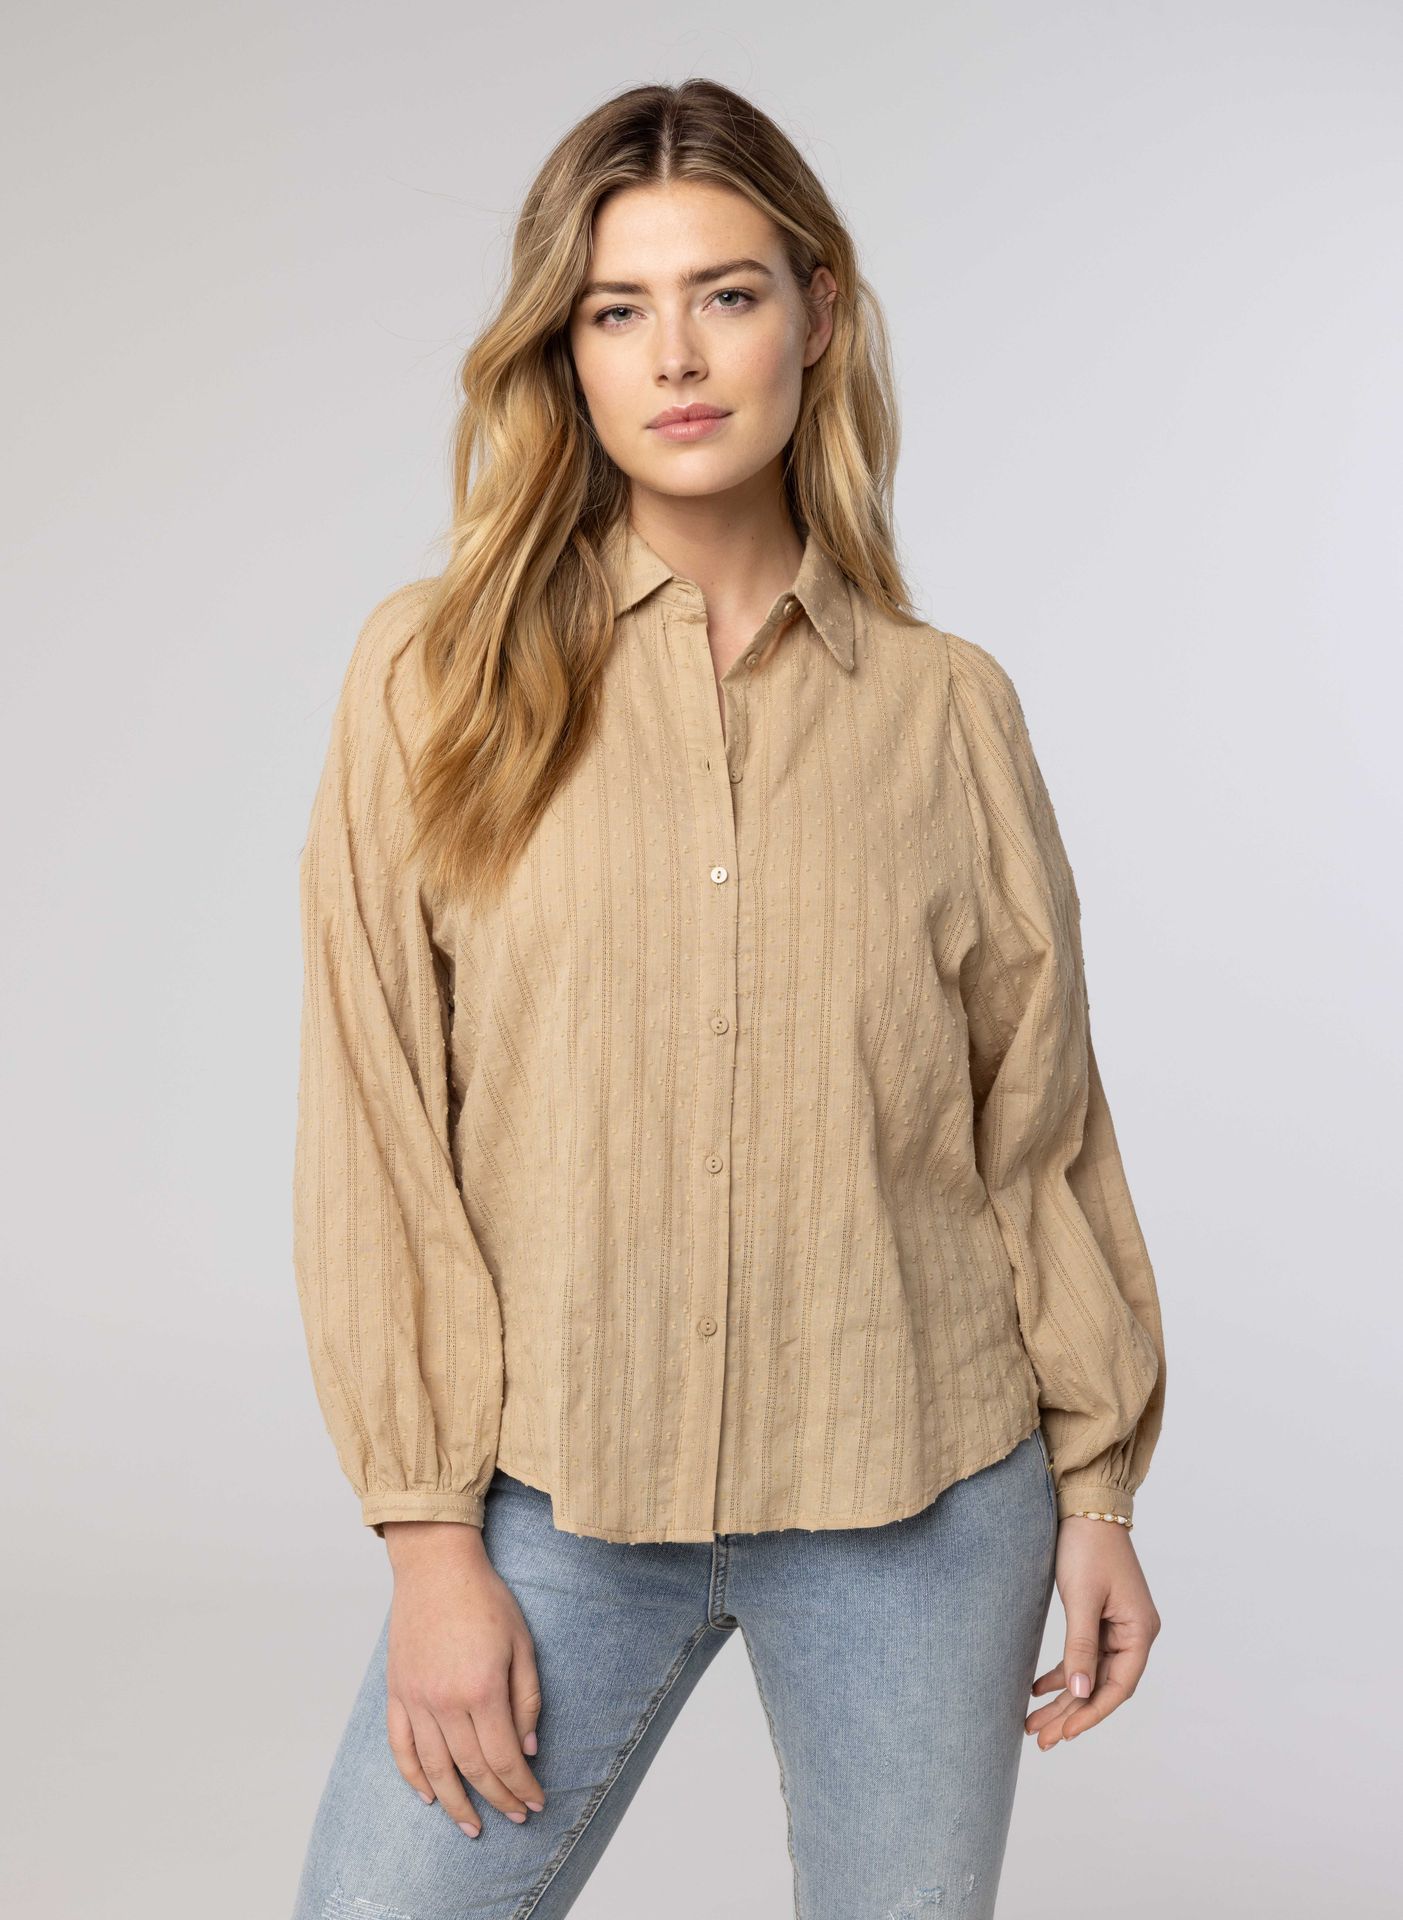 Norah Zandkleurige blouse  sand 214306-110-36